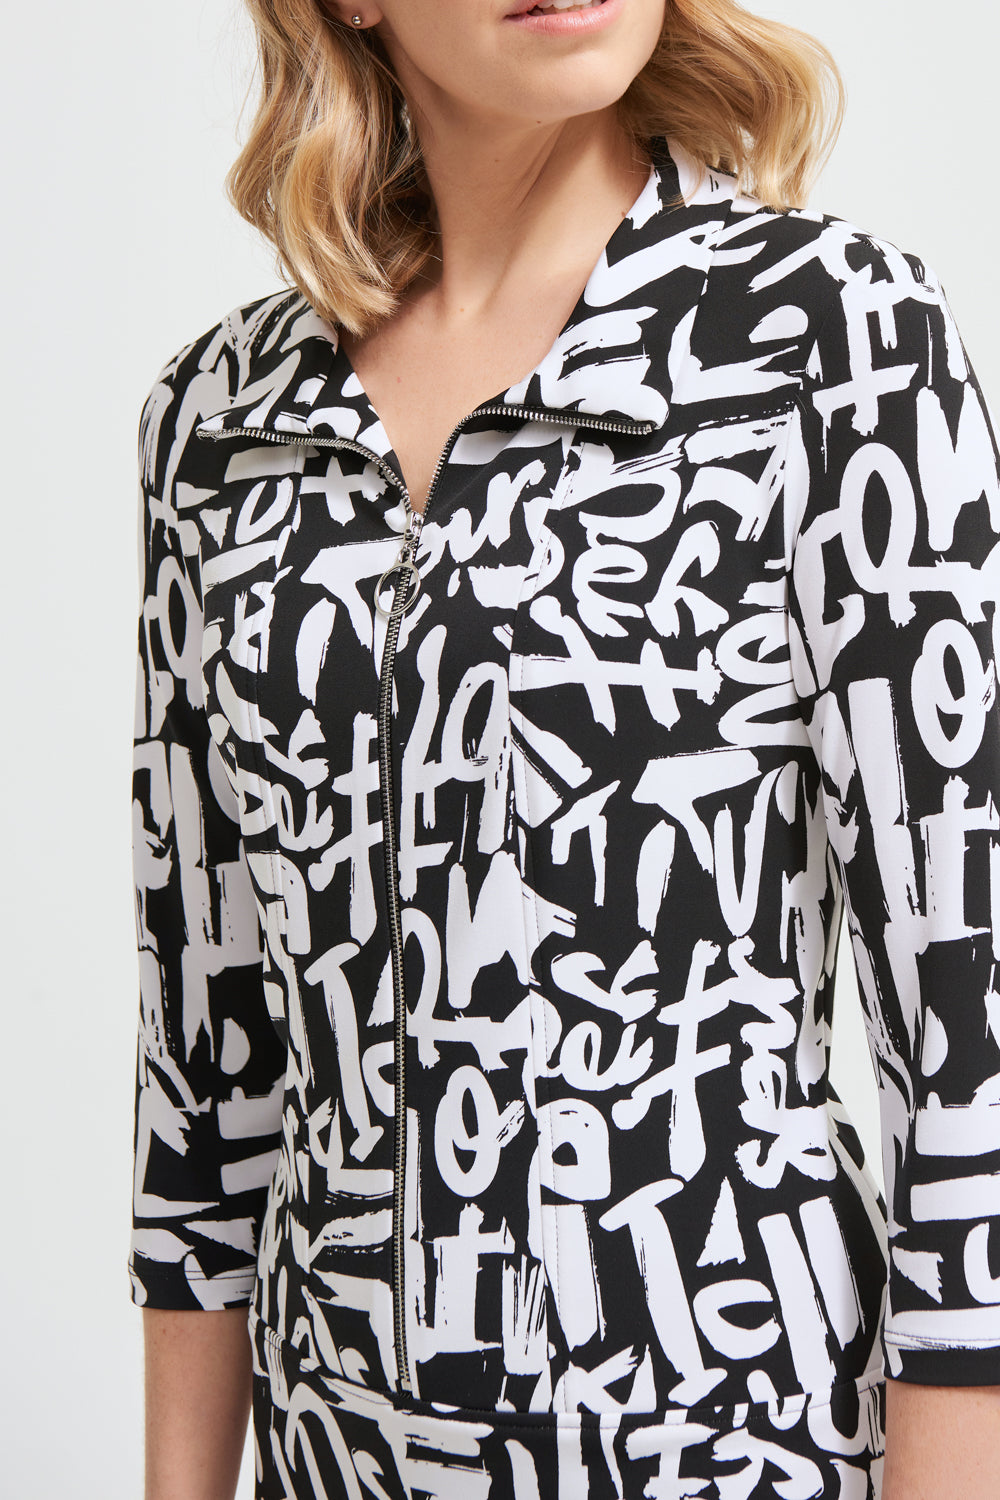 Joseph Ribkoff Black-Vanilla Graffiti Print Dress Style 213426